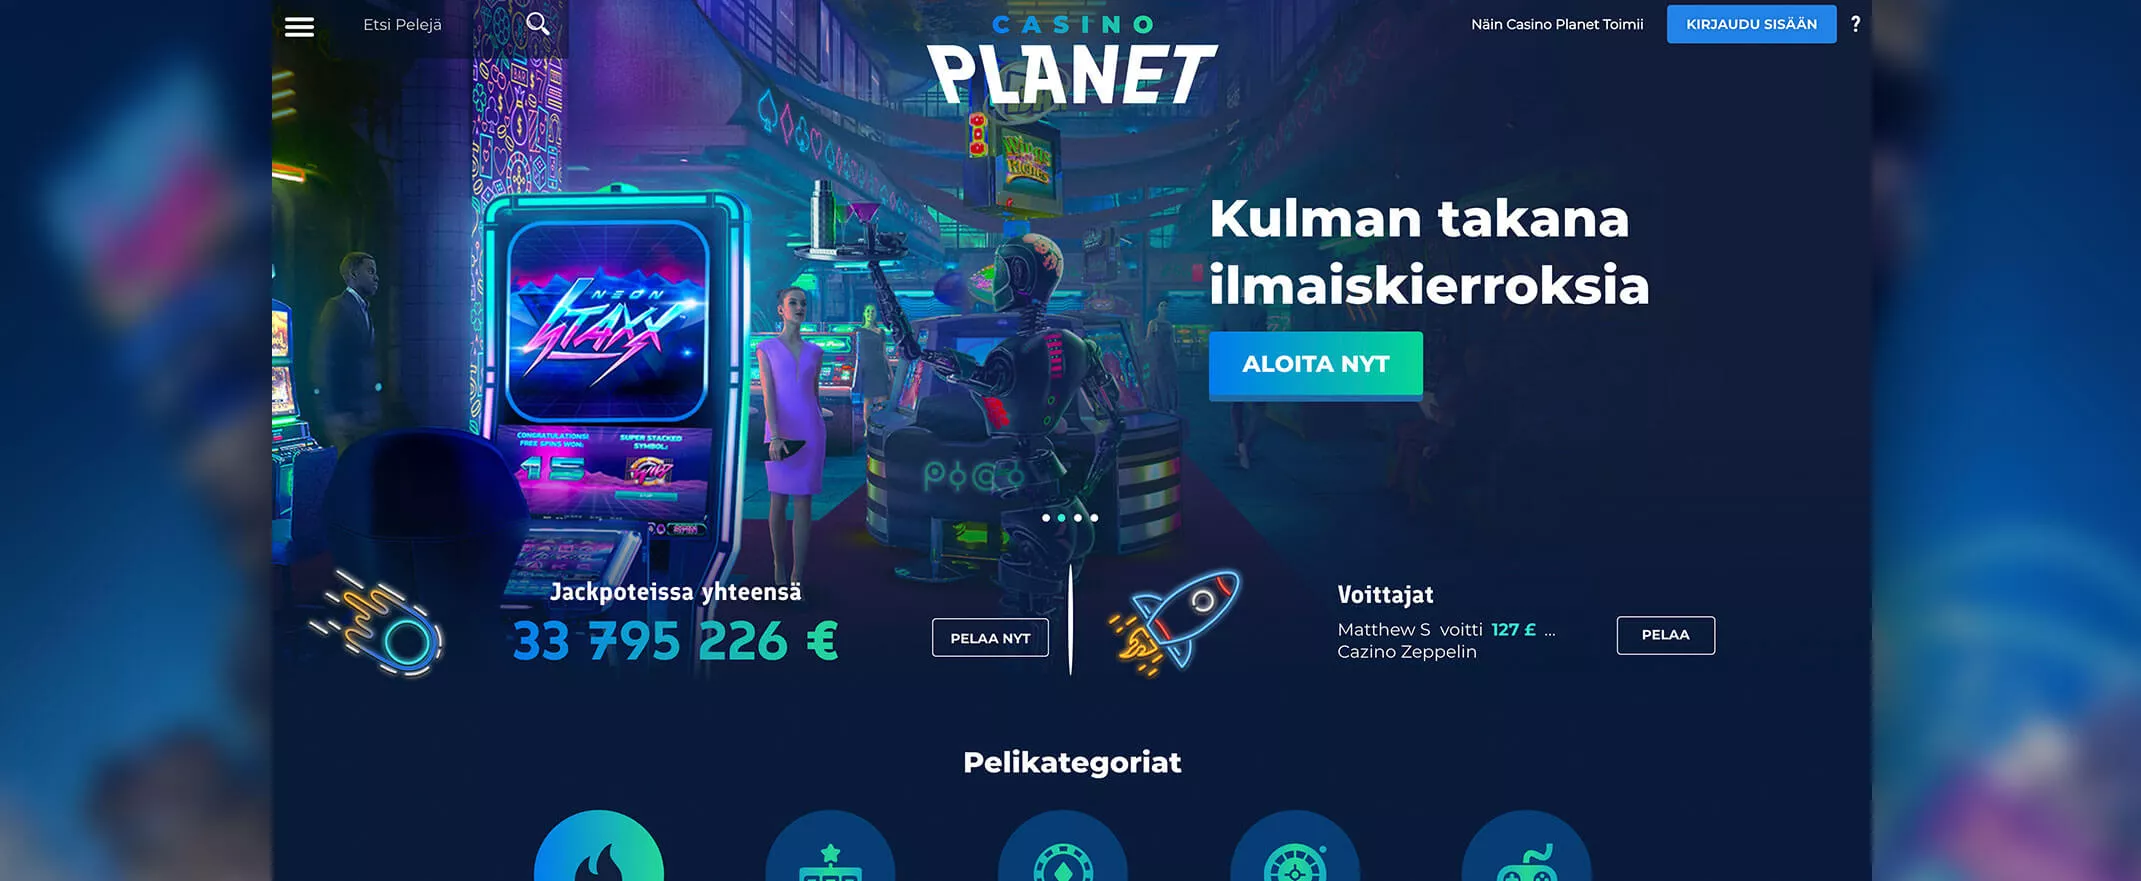 Casino Planet tervetuloa